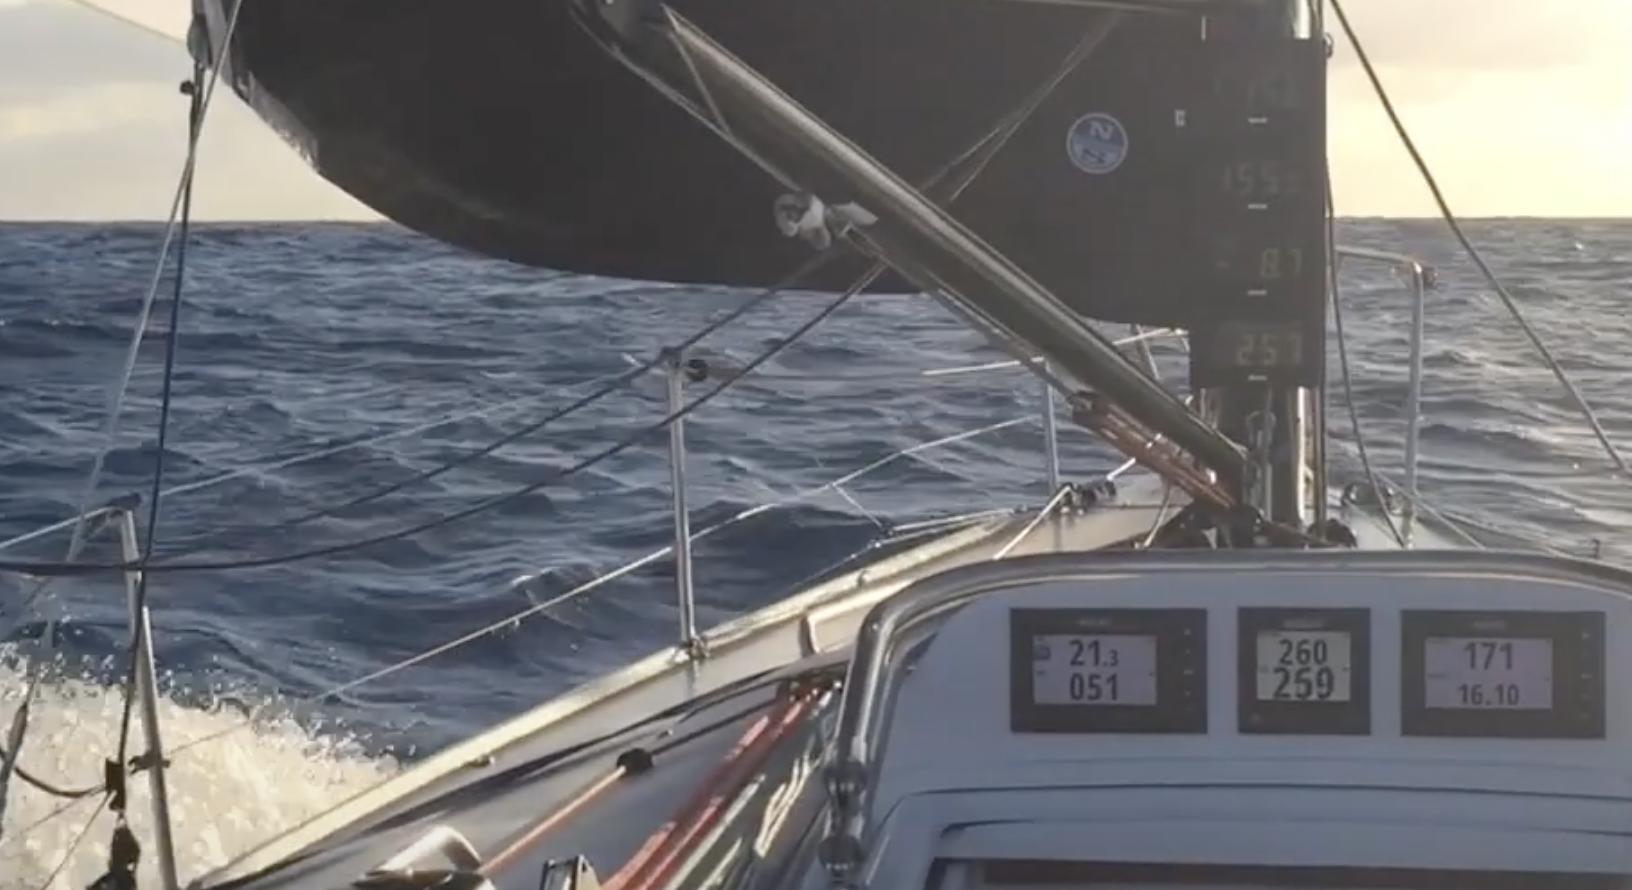 Boat speed 21 + knots TP 2019